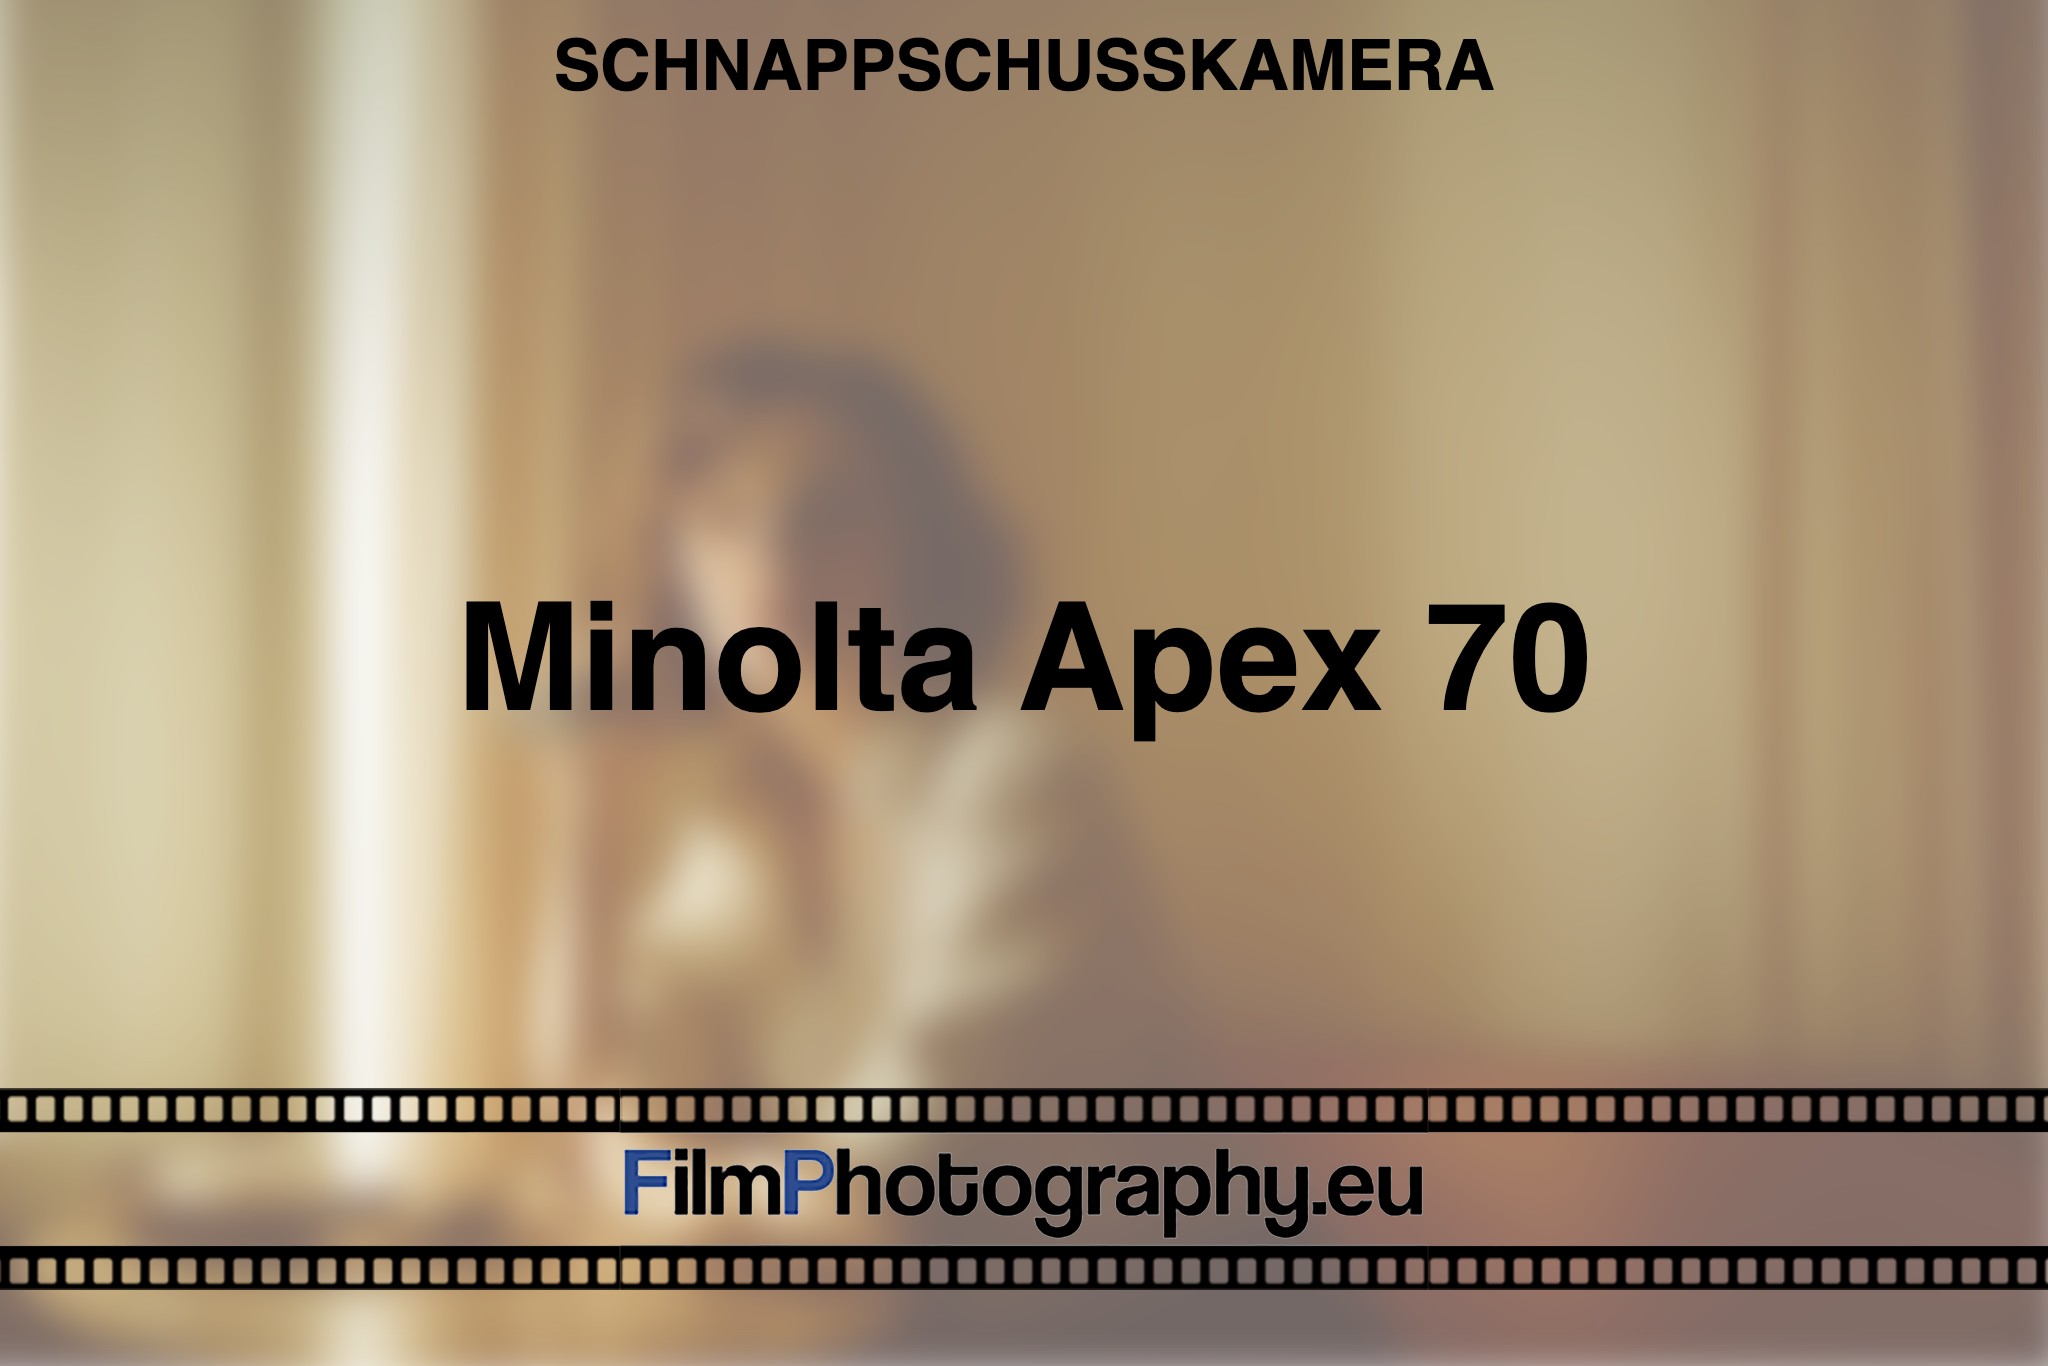 minolta-apex-70-schnappschusskamera-bnv